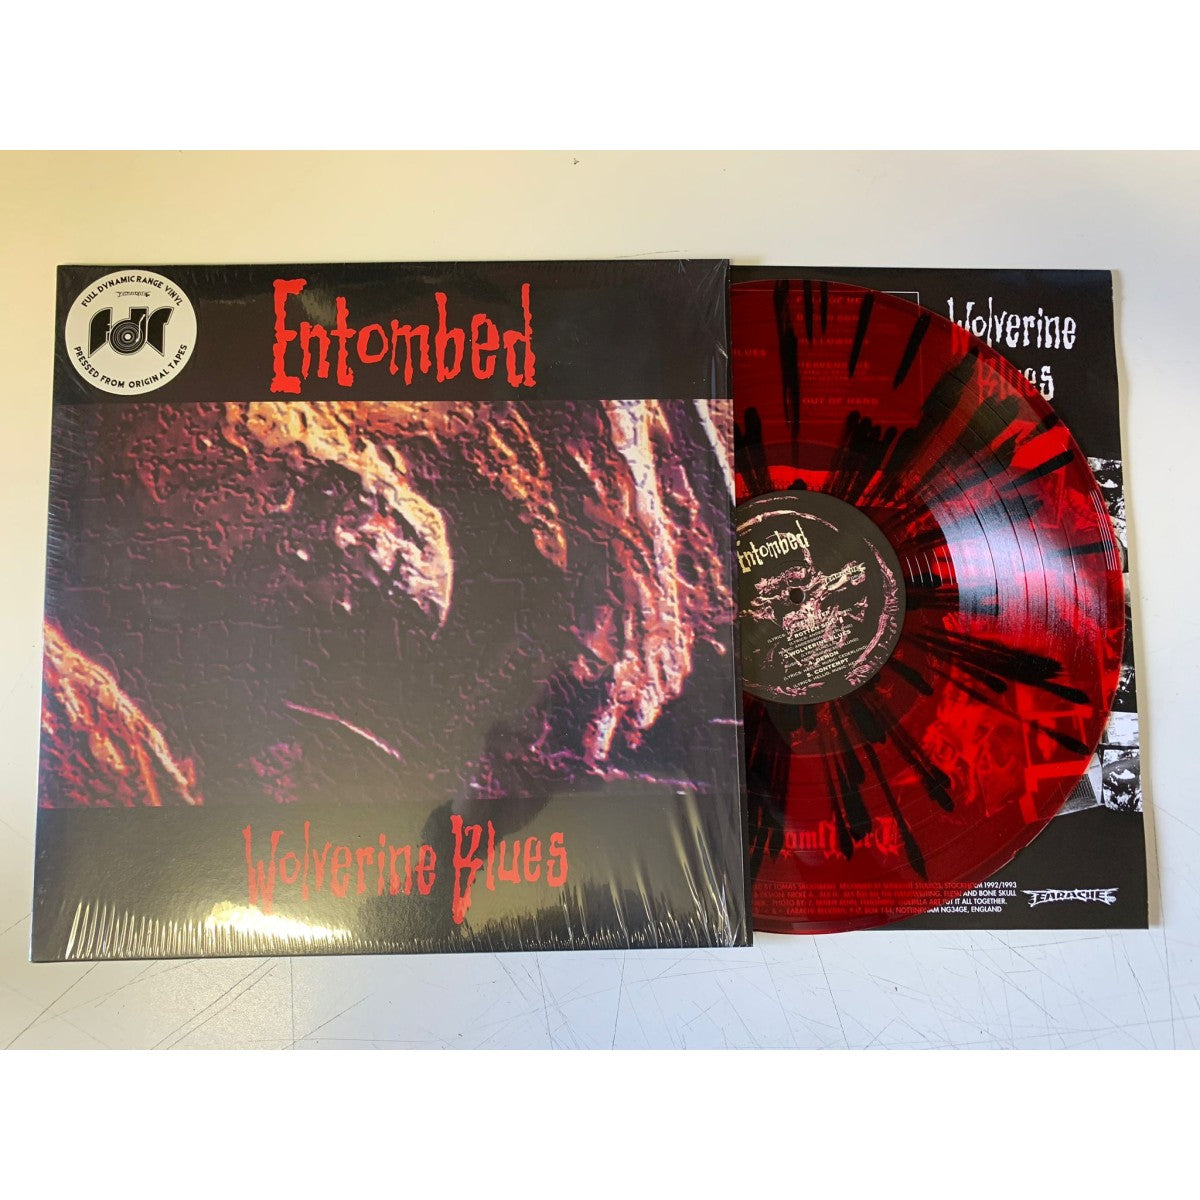 Entombed "Wolverine Blues" FDR Red / Black Splatter Vinyl